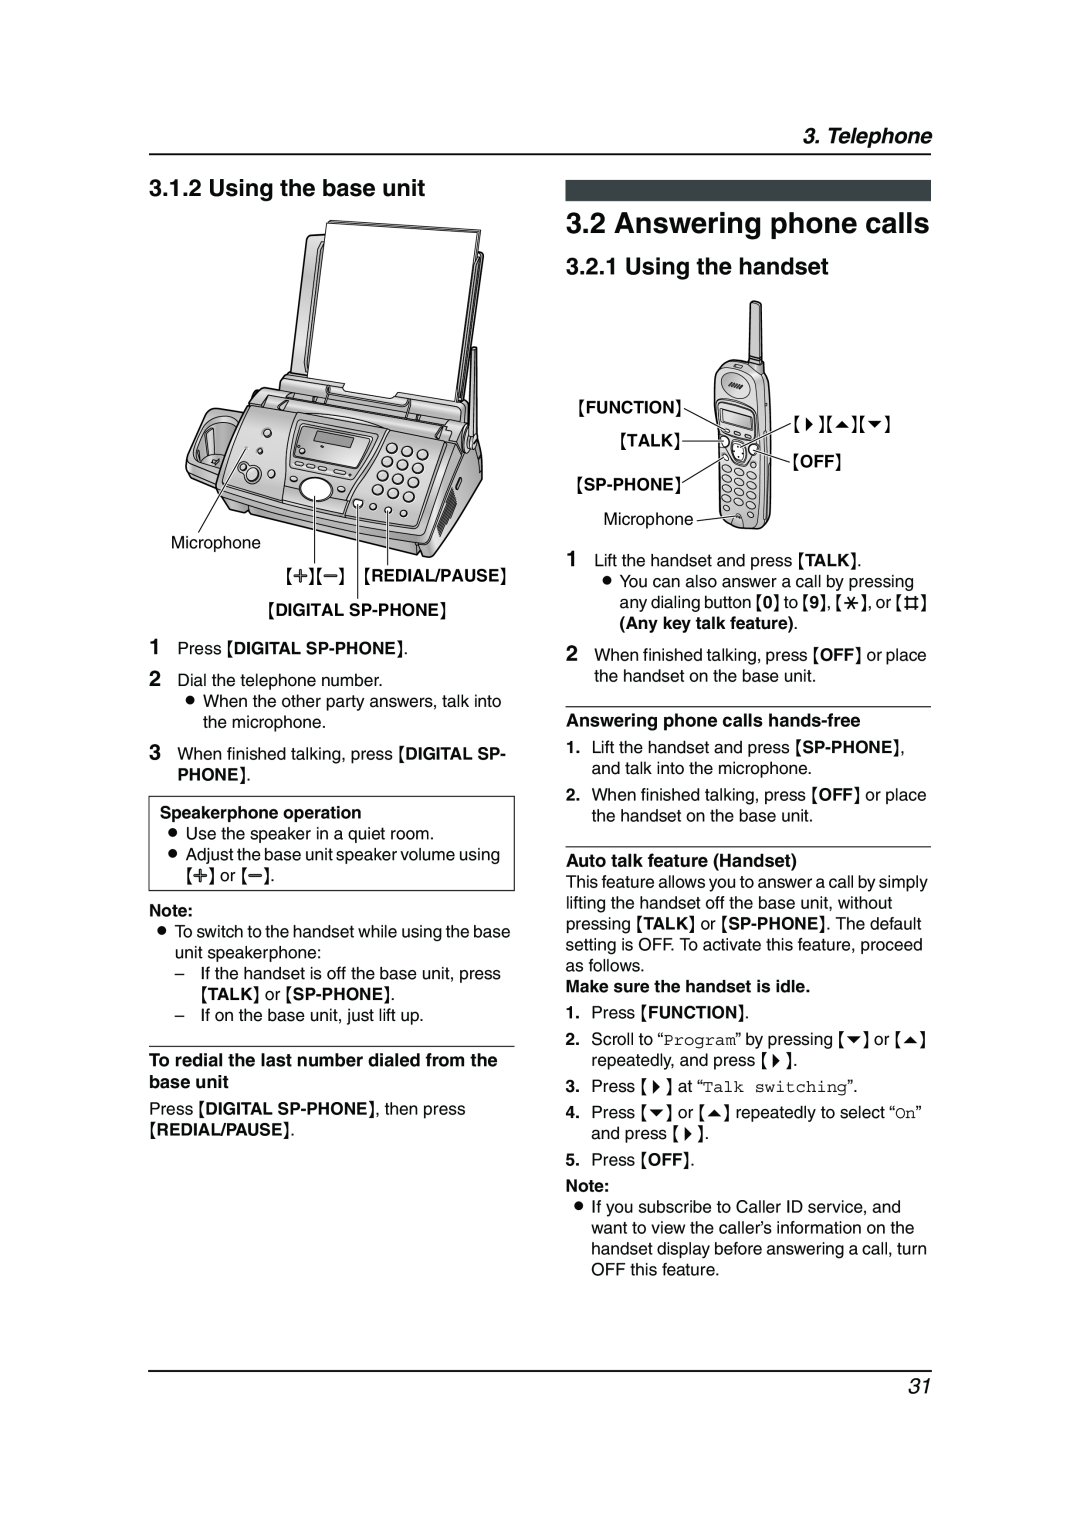 Panasonic KX-FPG377, KX-FPG376 manual Answering phone calls, Using the base unit, Using the handset, Telephone 